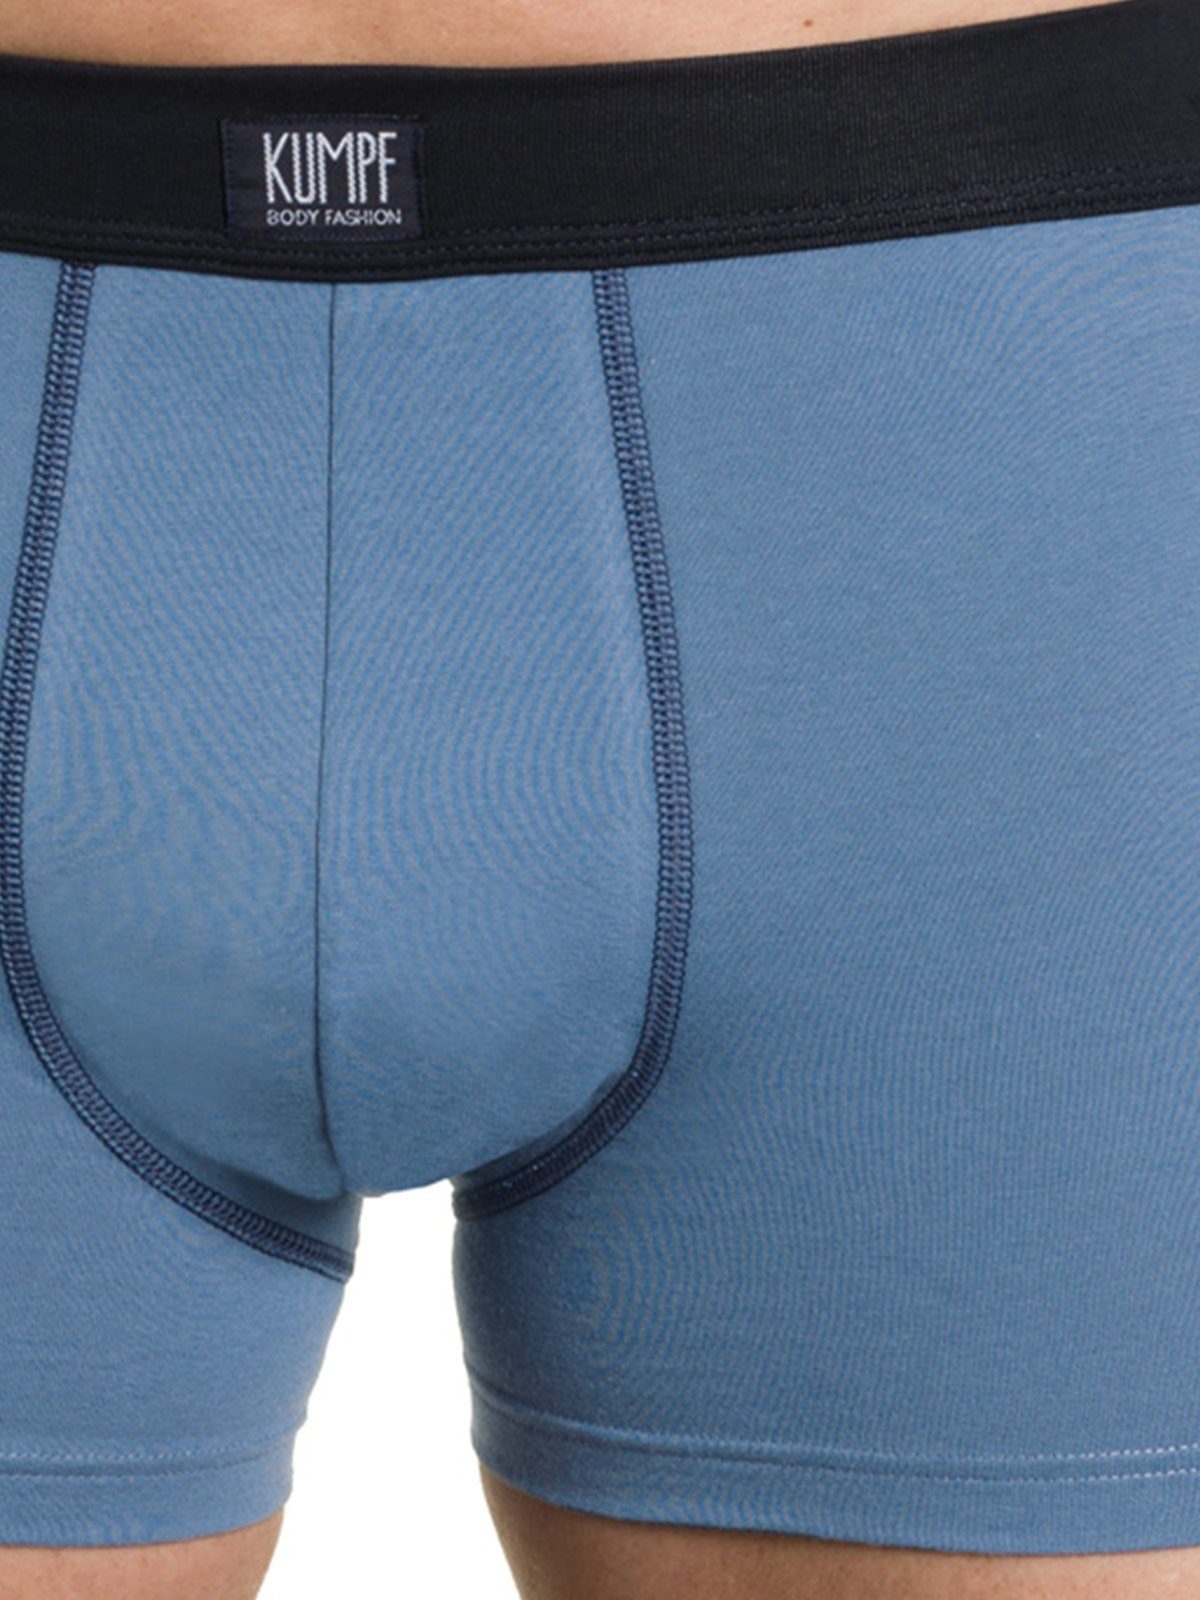 KUMPF Retro Pants Herren Pants multi Cotton colored 3er Markenqualität Bio hohe Pack 3-St) (Packung